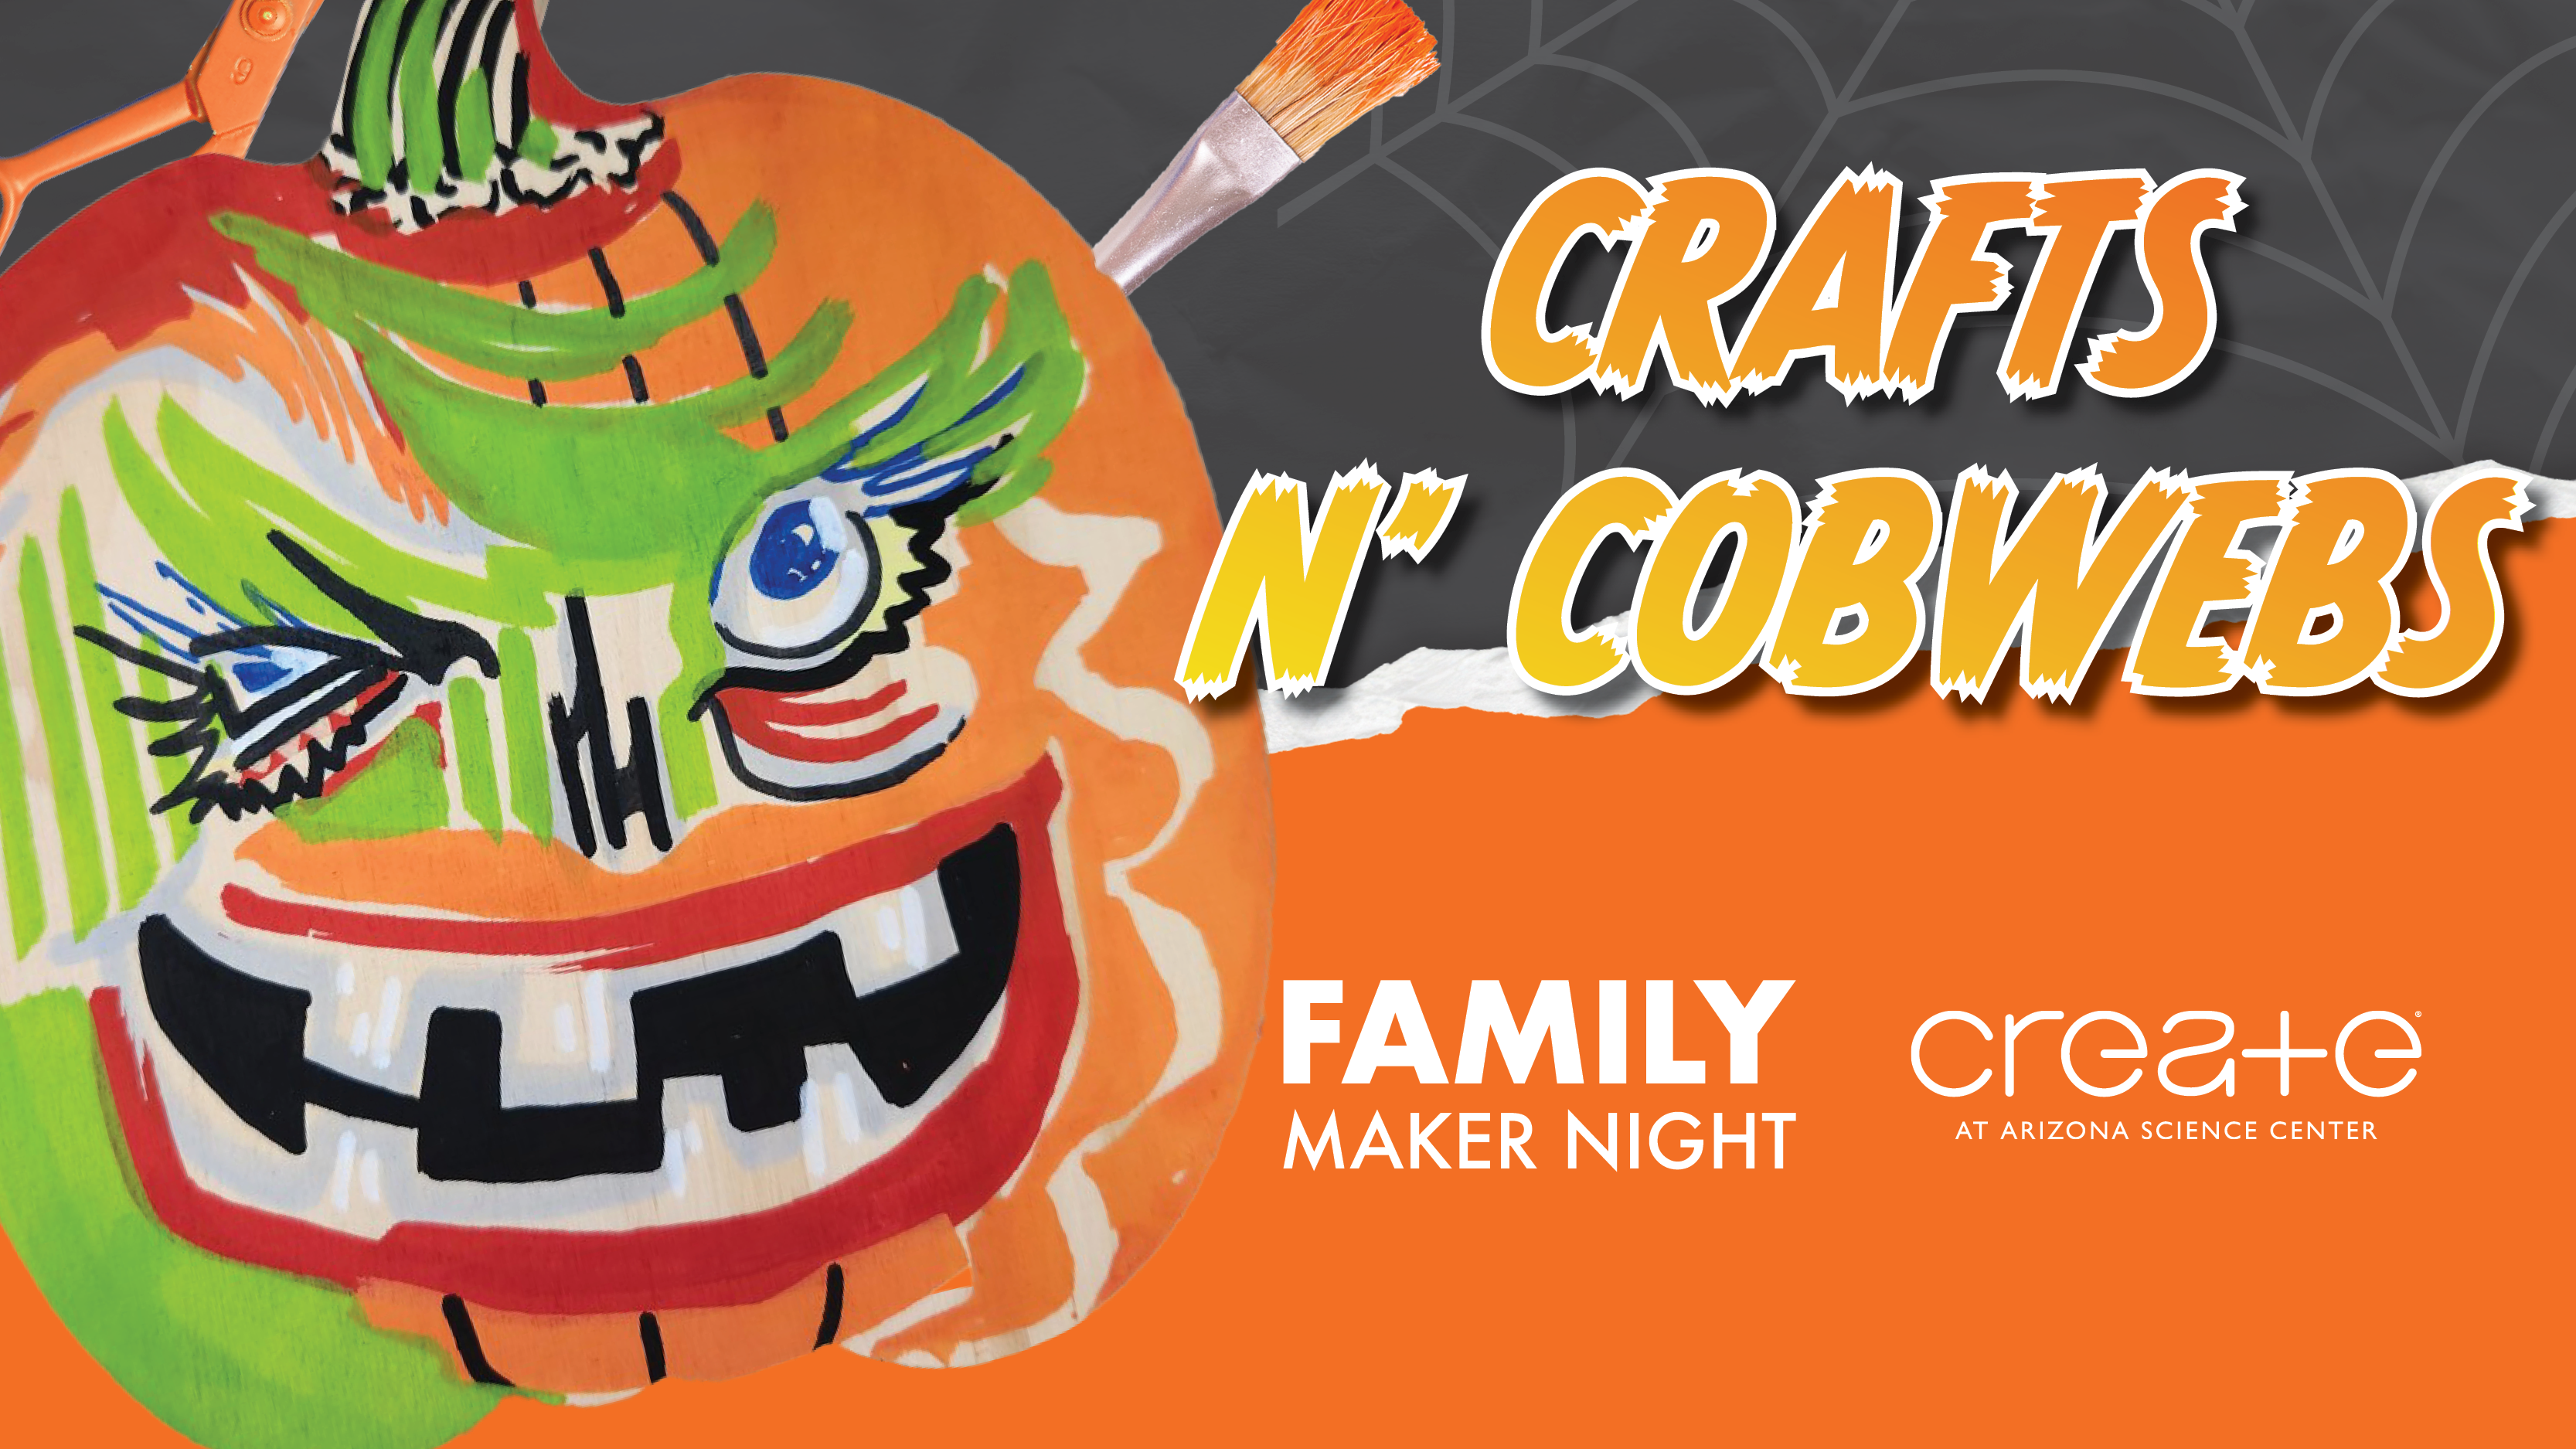 Family Maker Night Crafts n' Cobwebs